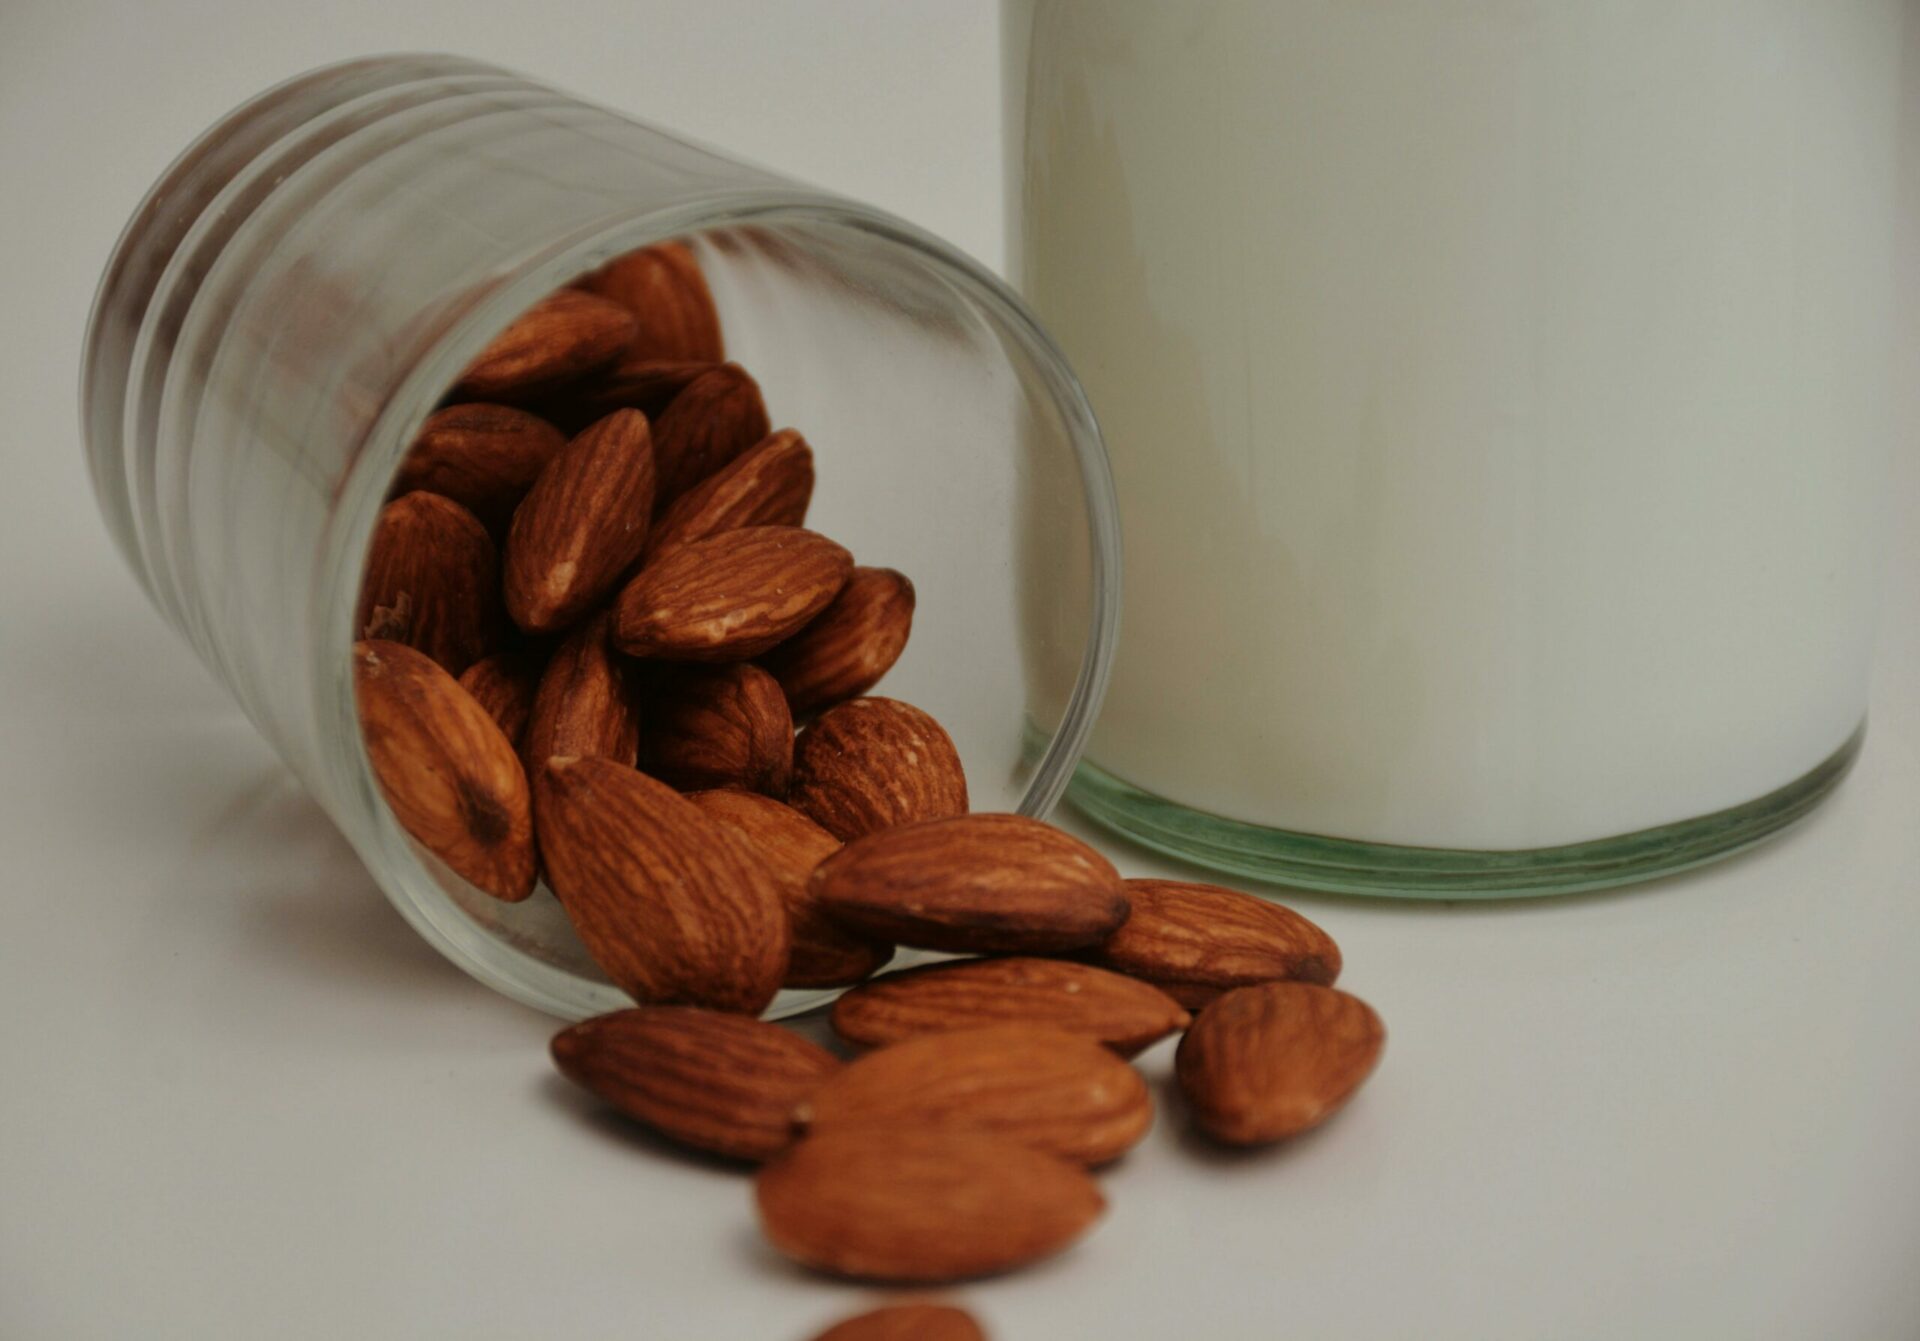 Almond Milk's Shelf Life